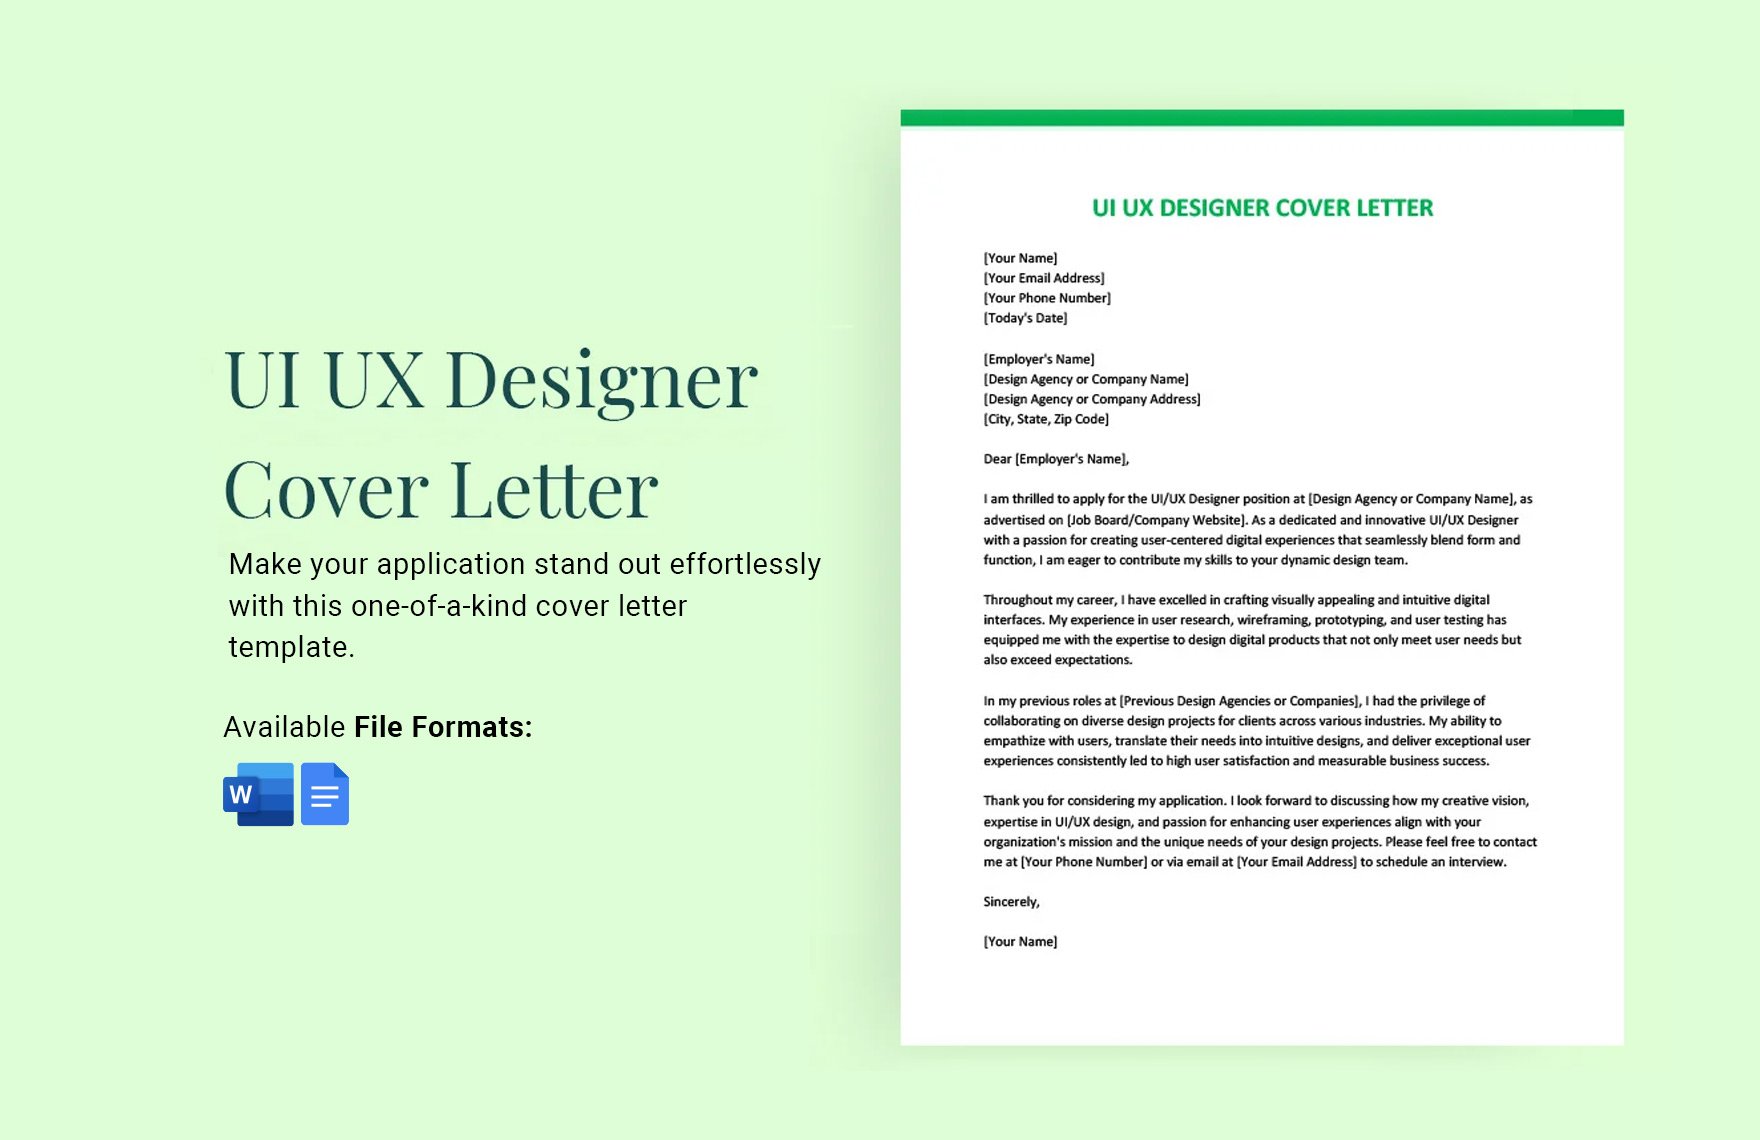 UI UX Designer Cover Letter in Word, Google Docs